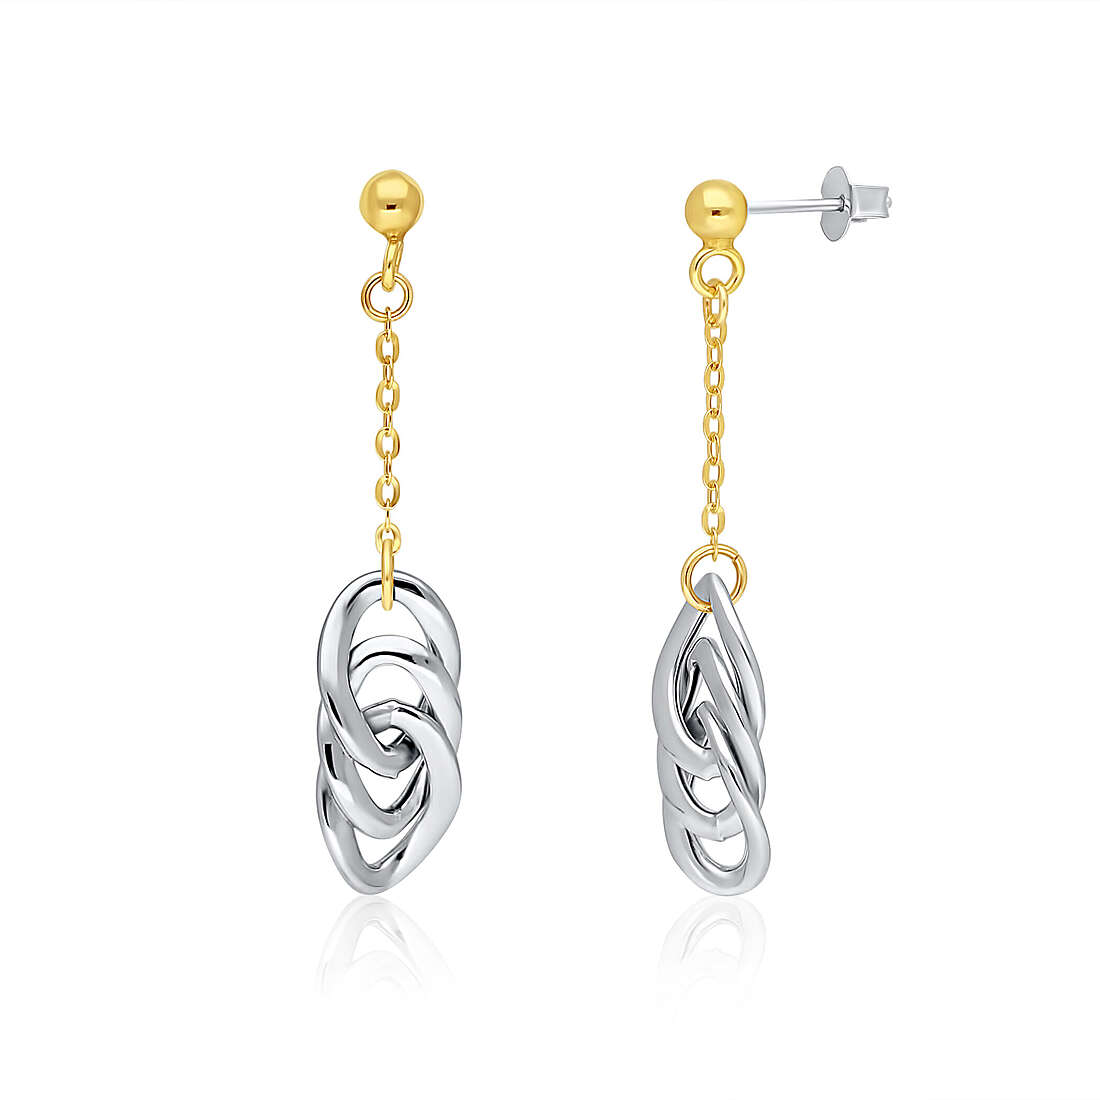 ear-rings woman jewellery GioiaPura Oro 375 GP9-S171753